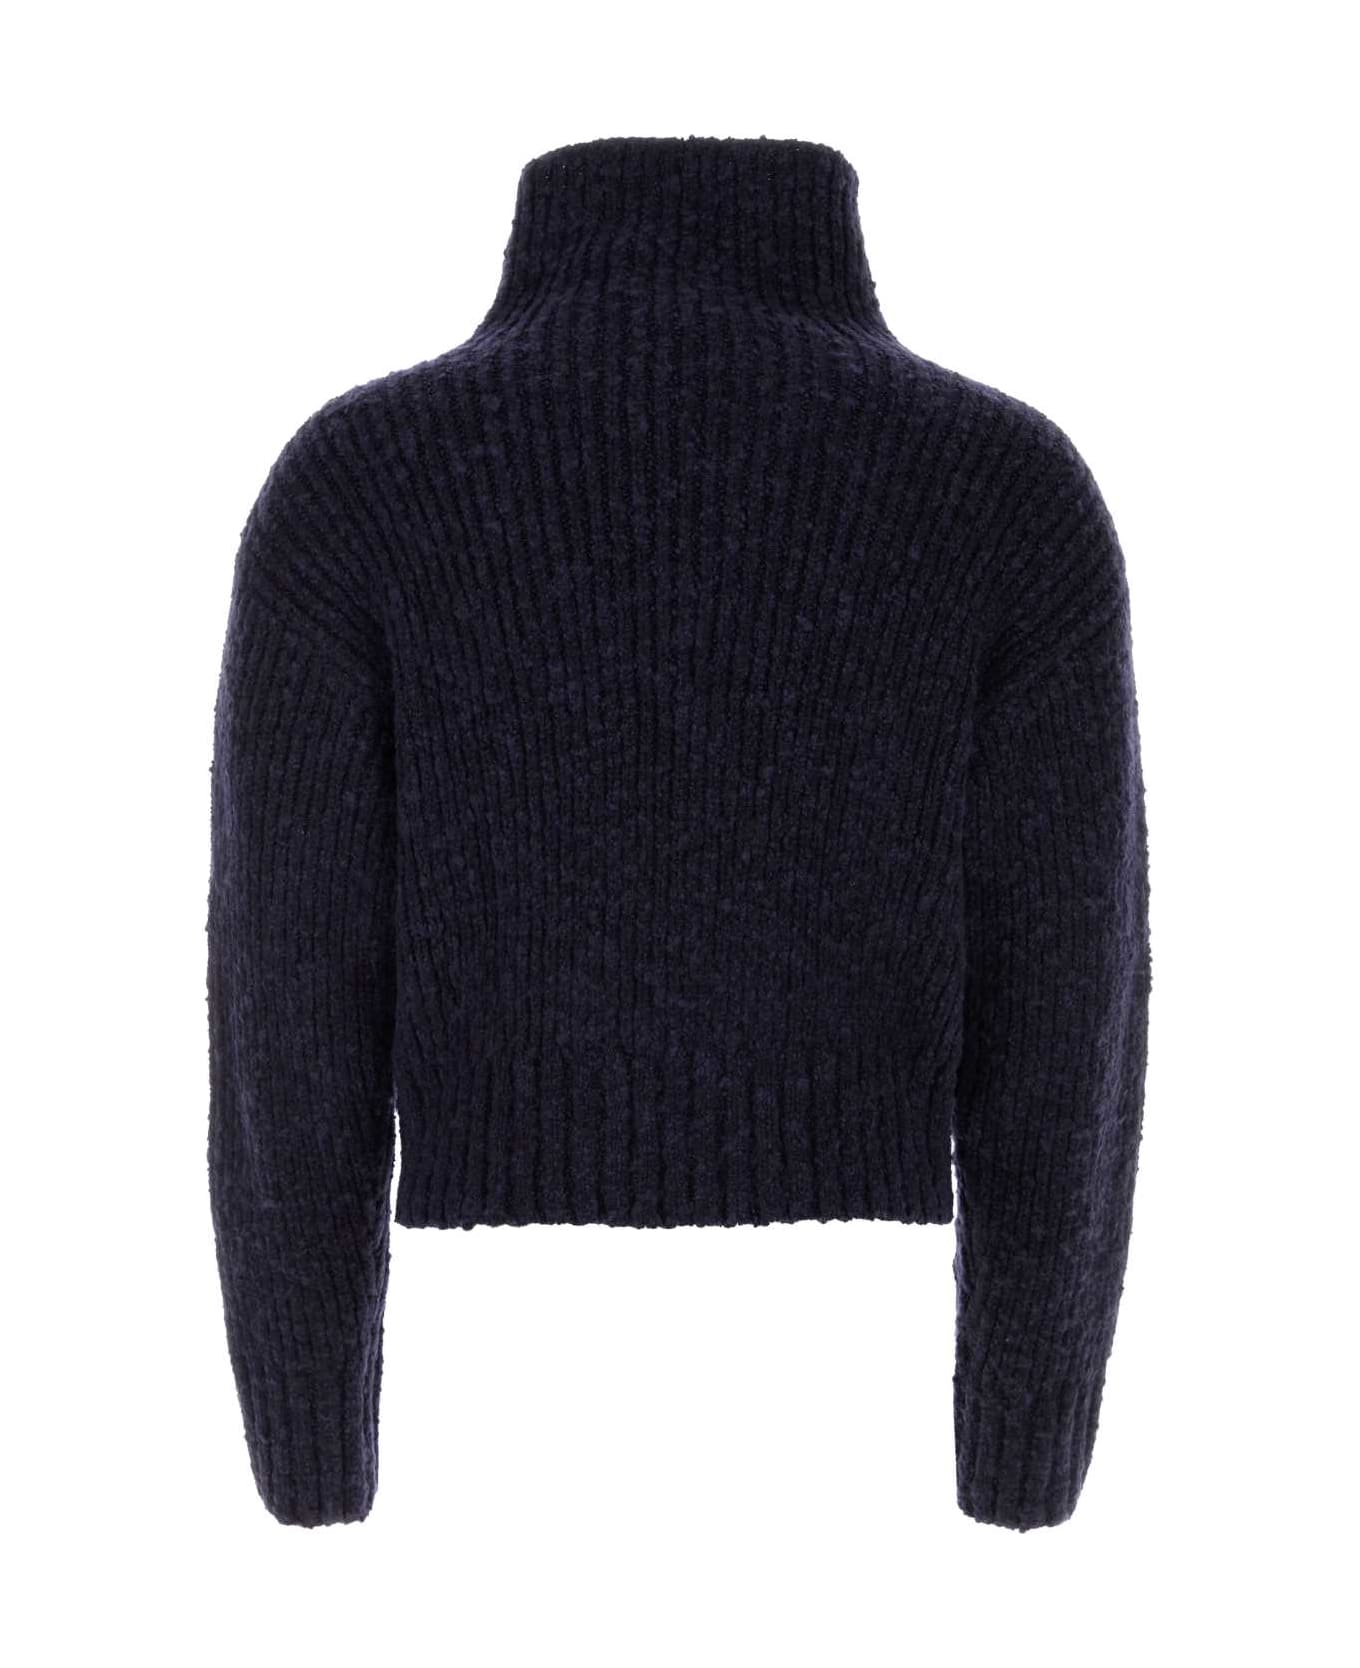 Ami Alexandre Mattiussi Midnight Blue Wool Blend Sweater - NIGHTBLUE